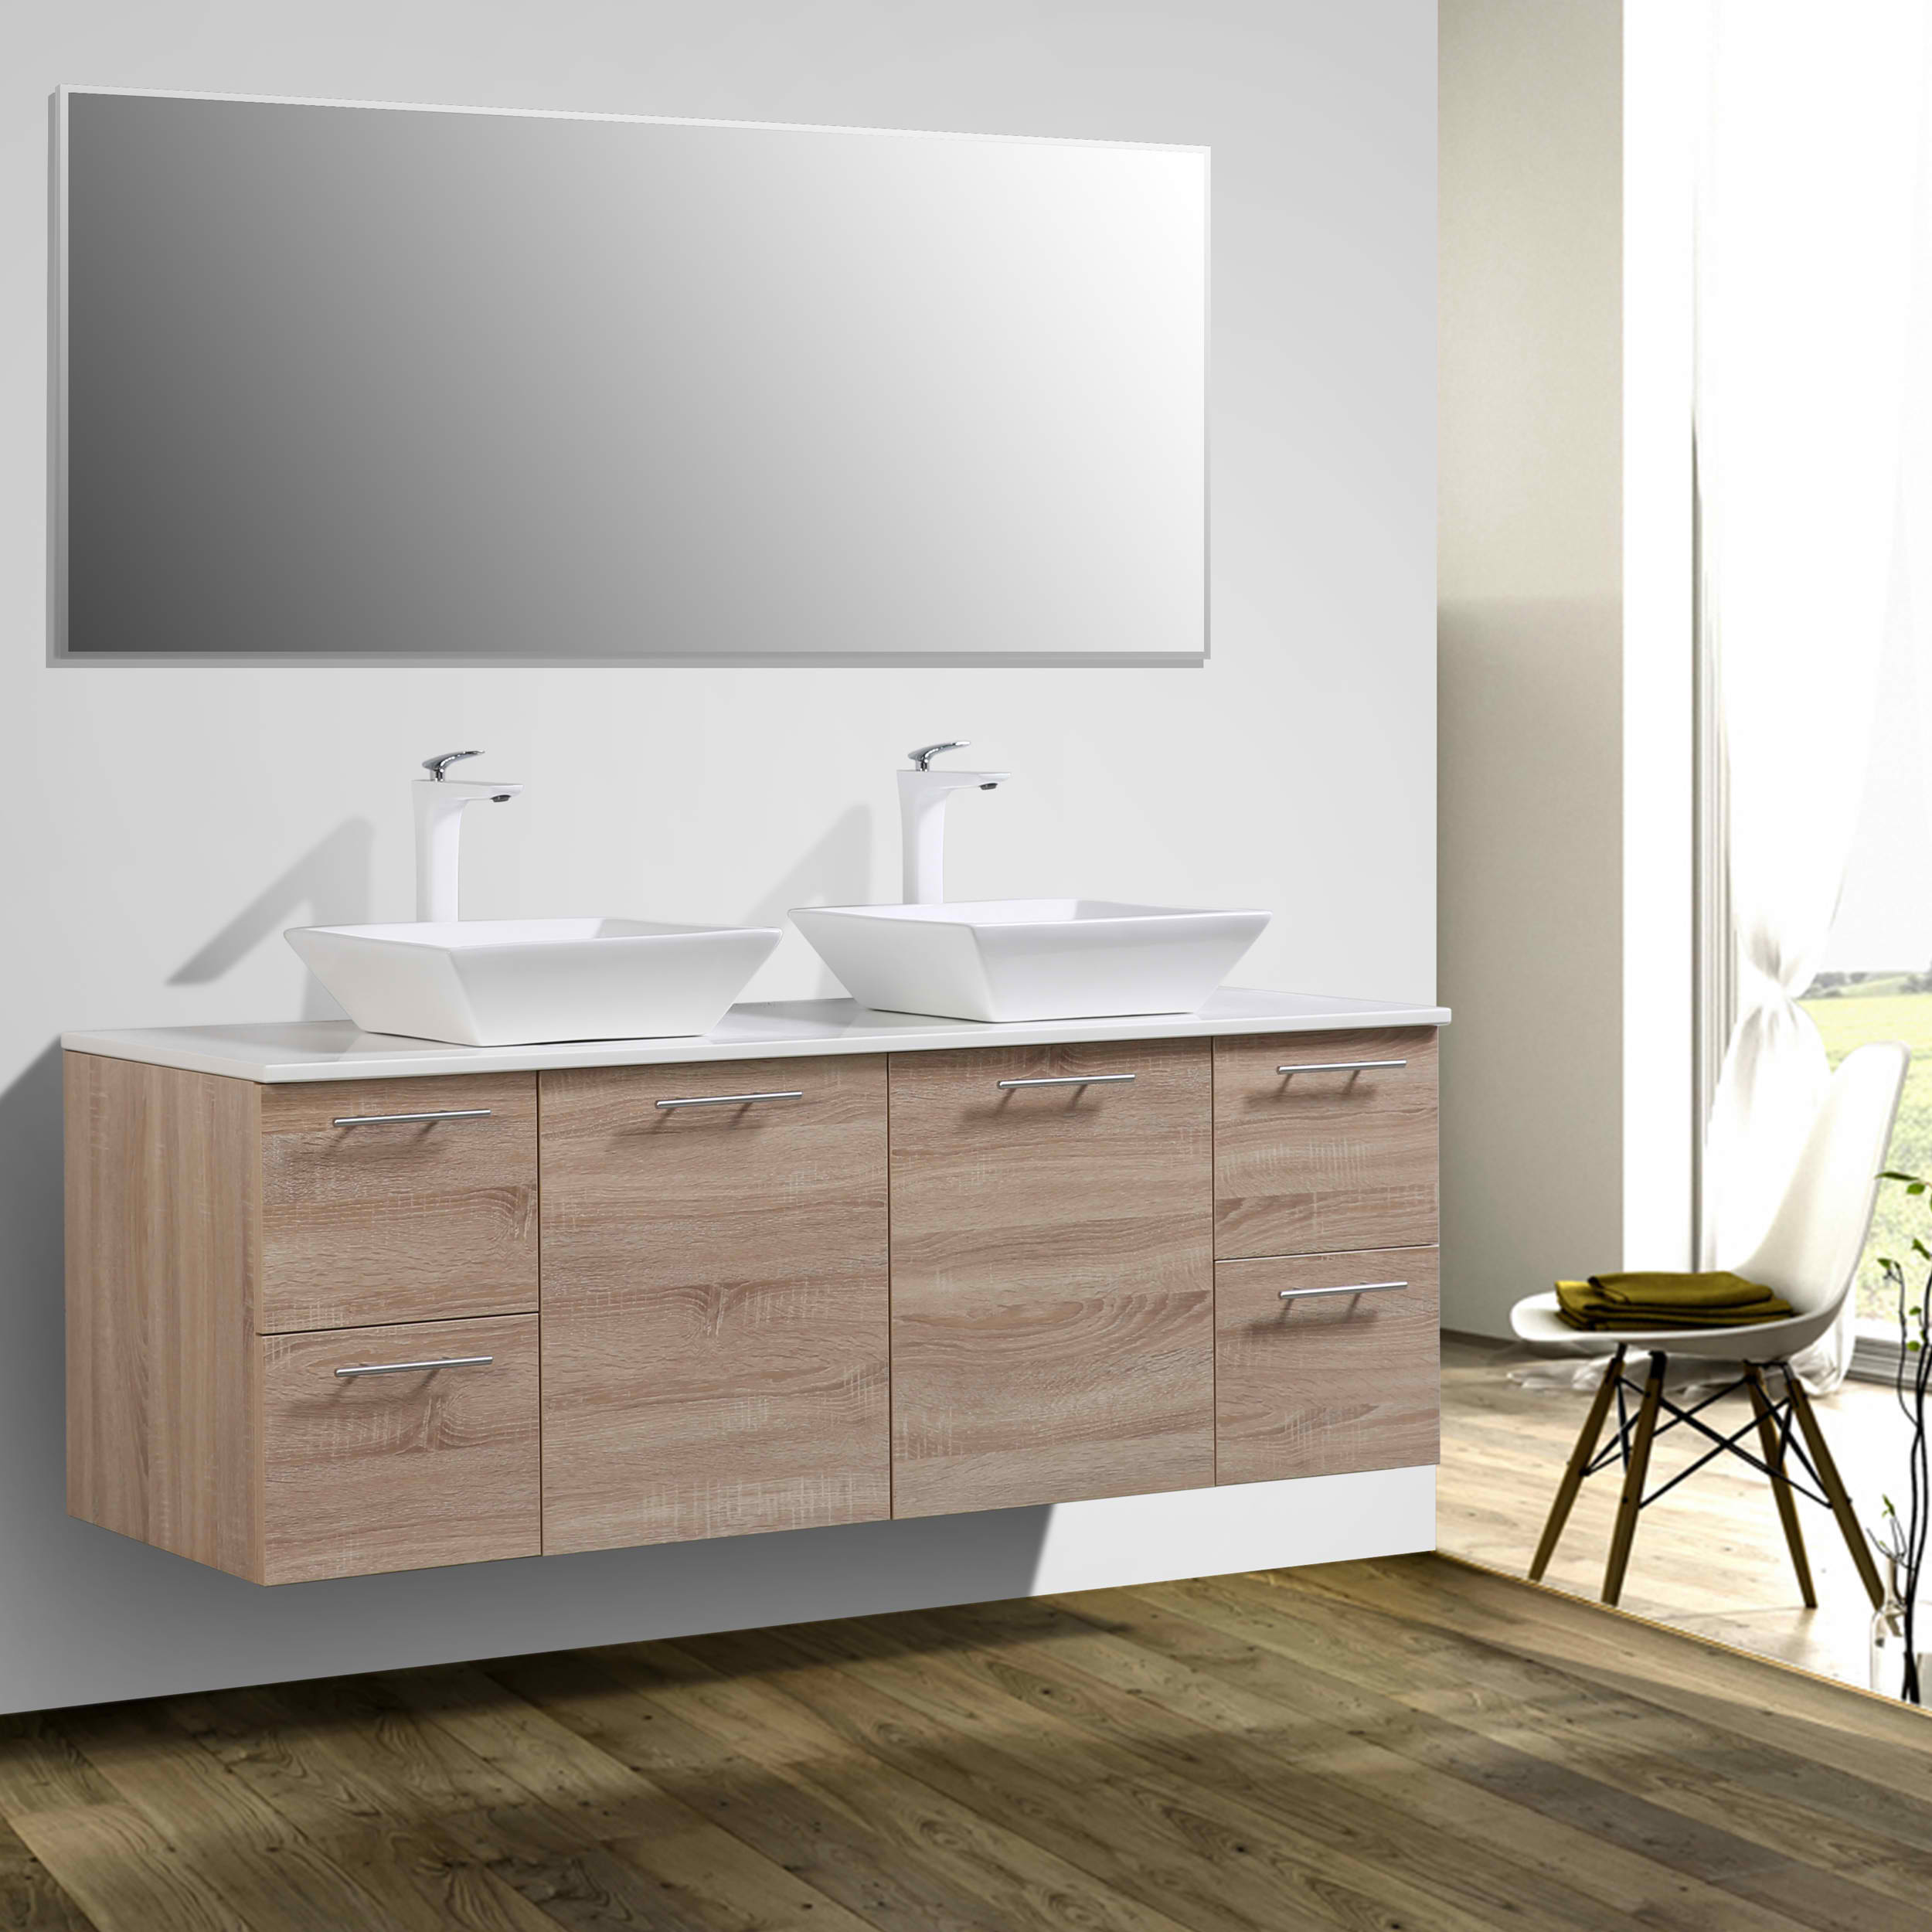 Luxury 60" White Oak Wall Mounted Bathroom Vanity with Glassos Top and Double Vessel Sinks